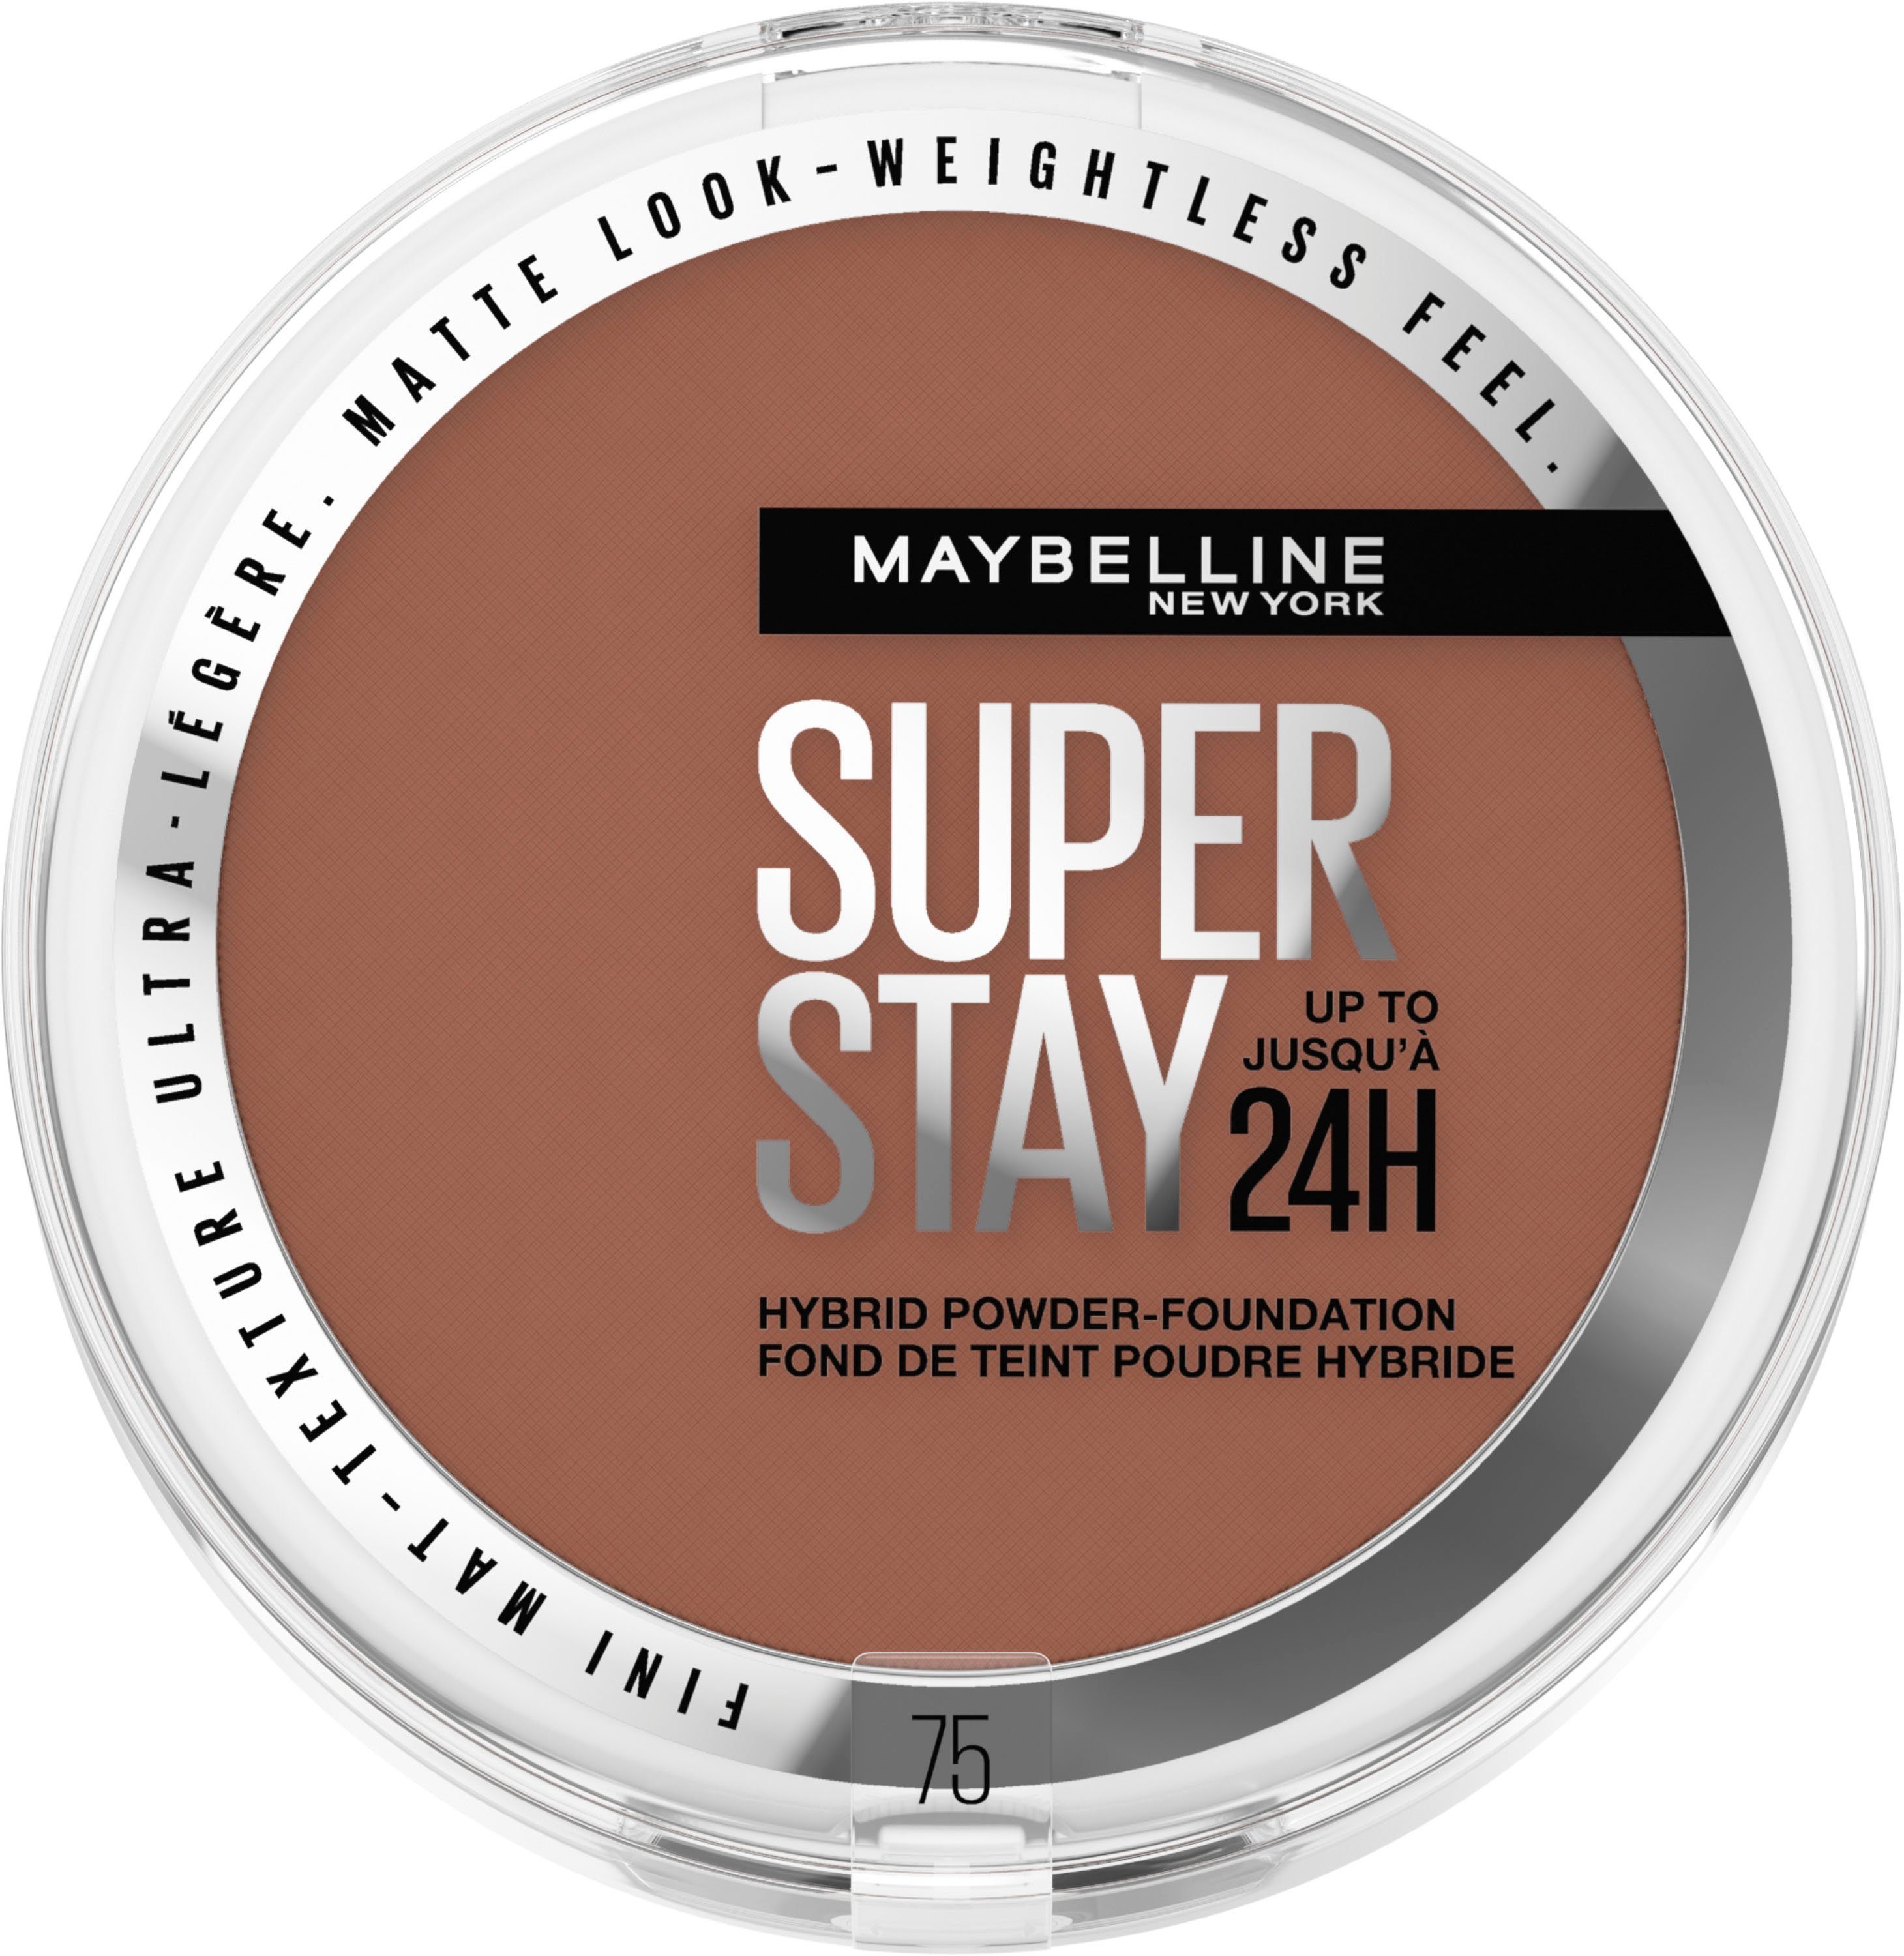 MAYBELLINE NEW YORK Foundation Maybelline New York Super Stay Hybrides Puder Make-Up | Foundation